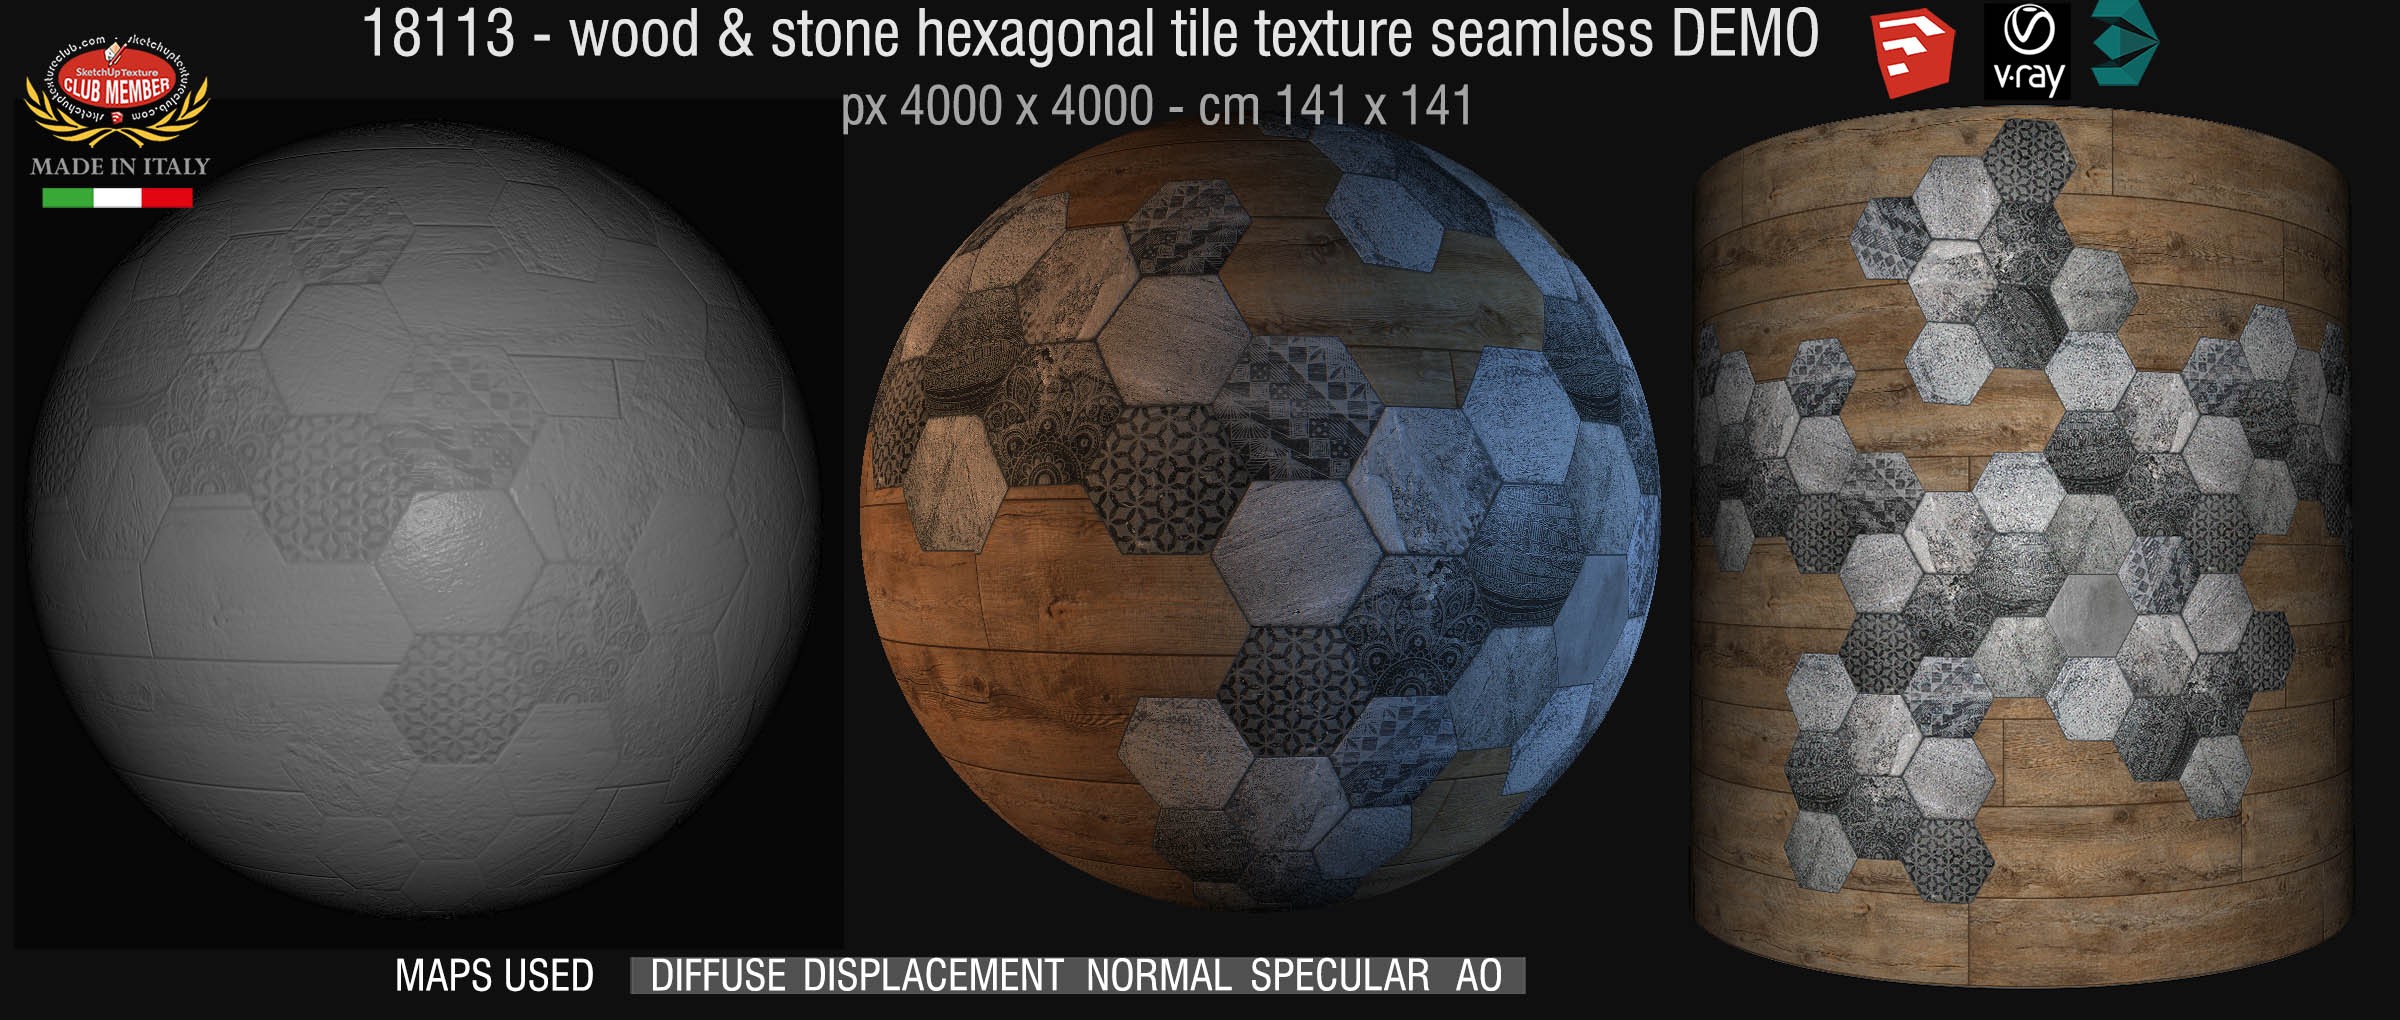 Hexagonal tile texture seamless 18113